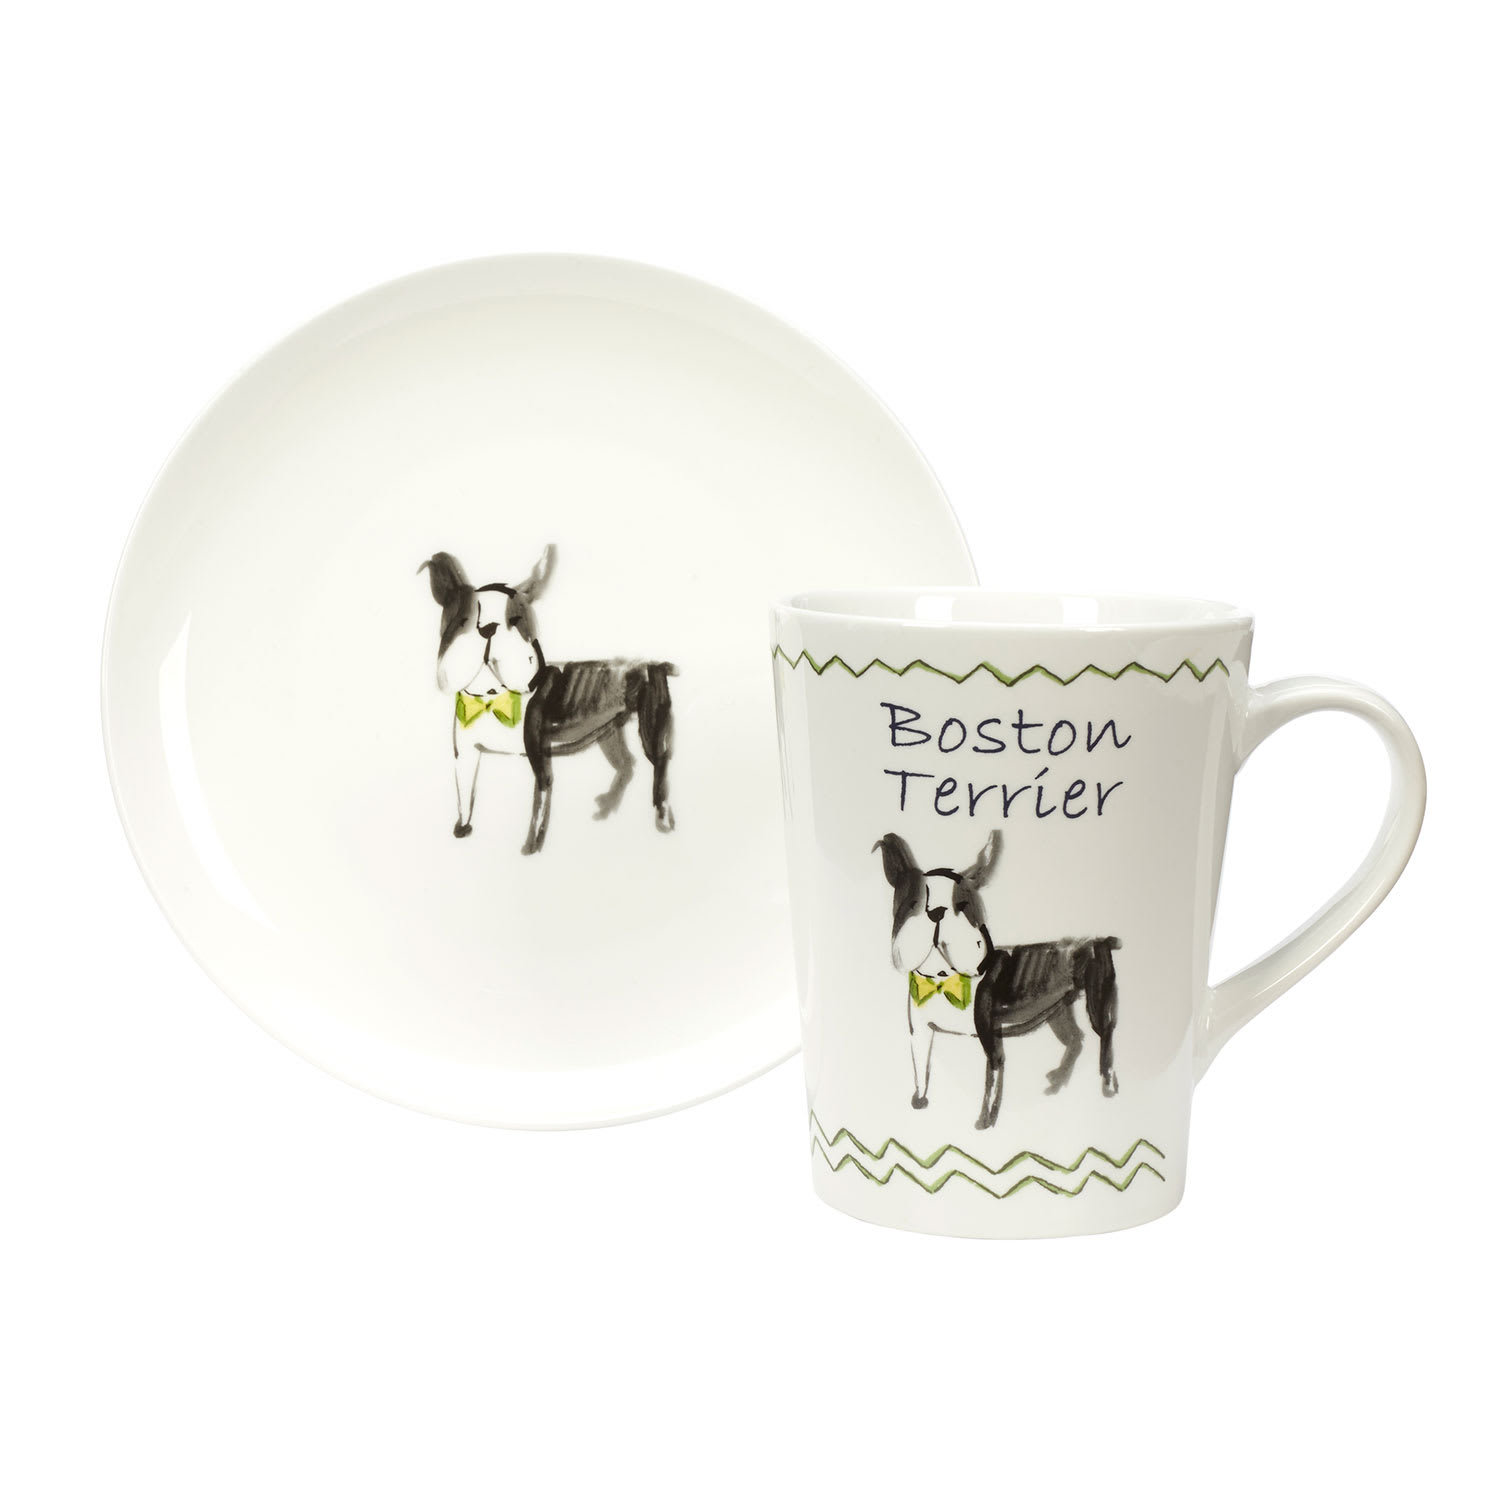 Boston Terrier Mug & Salad Plate Set